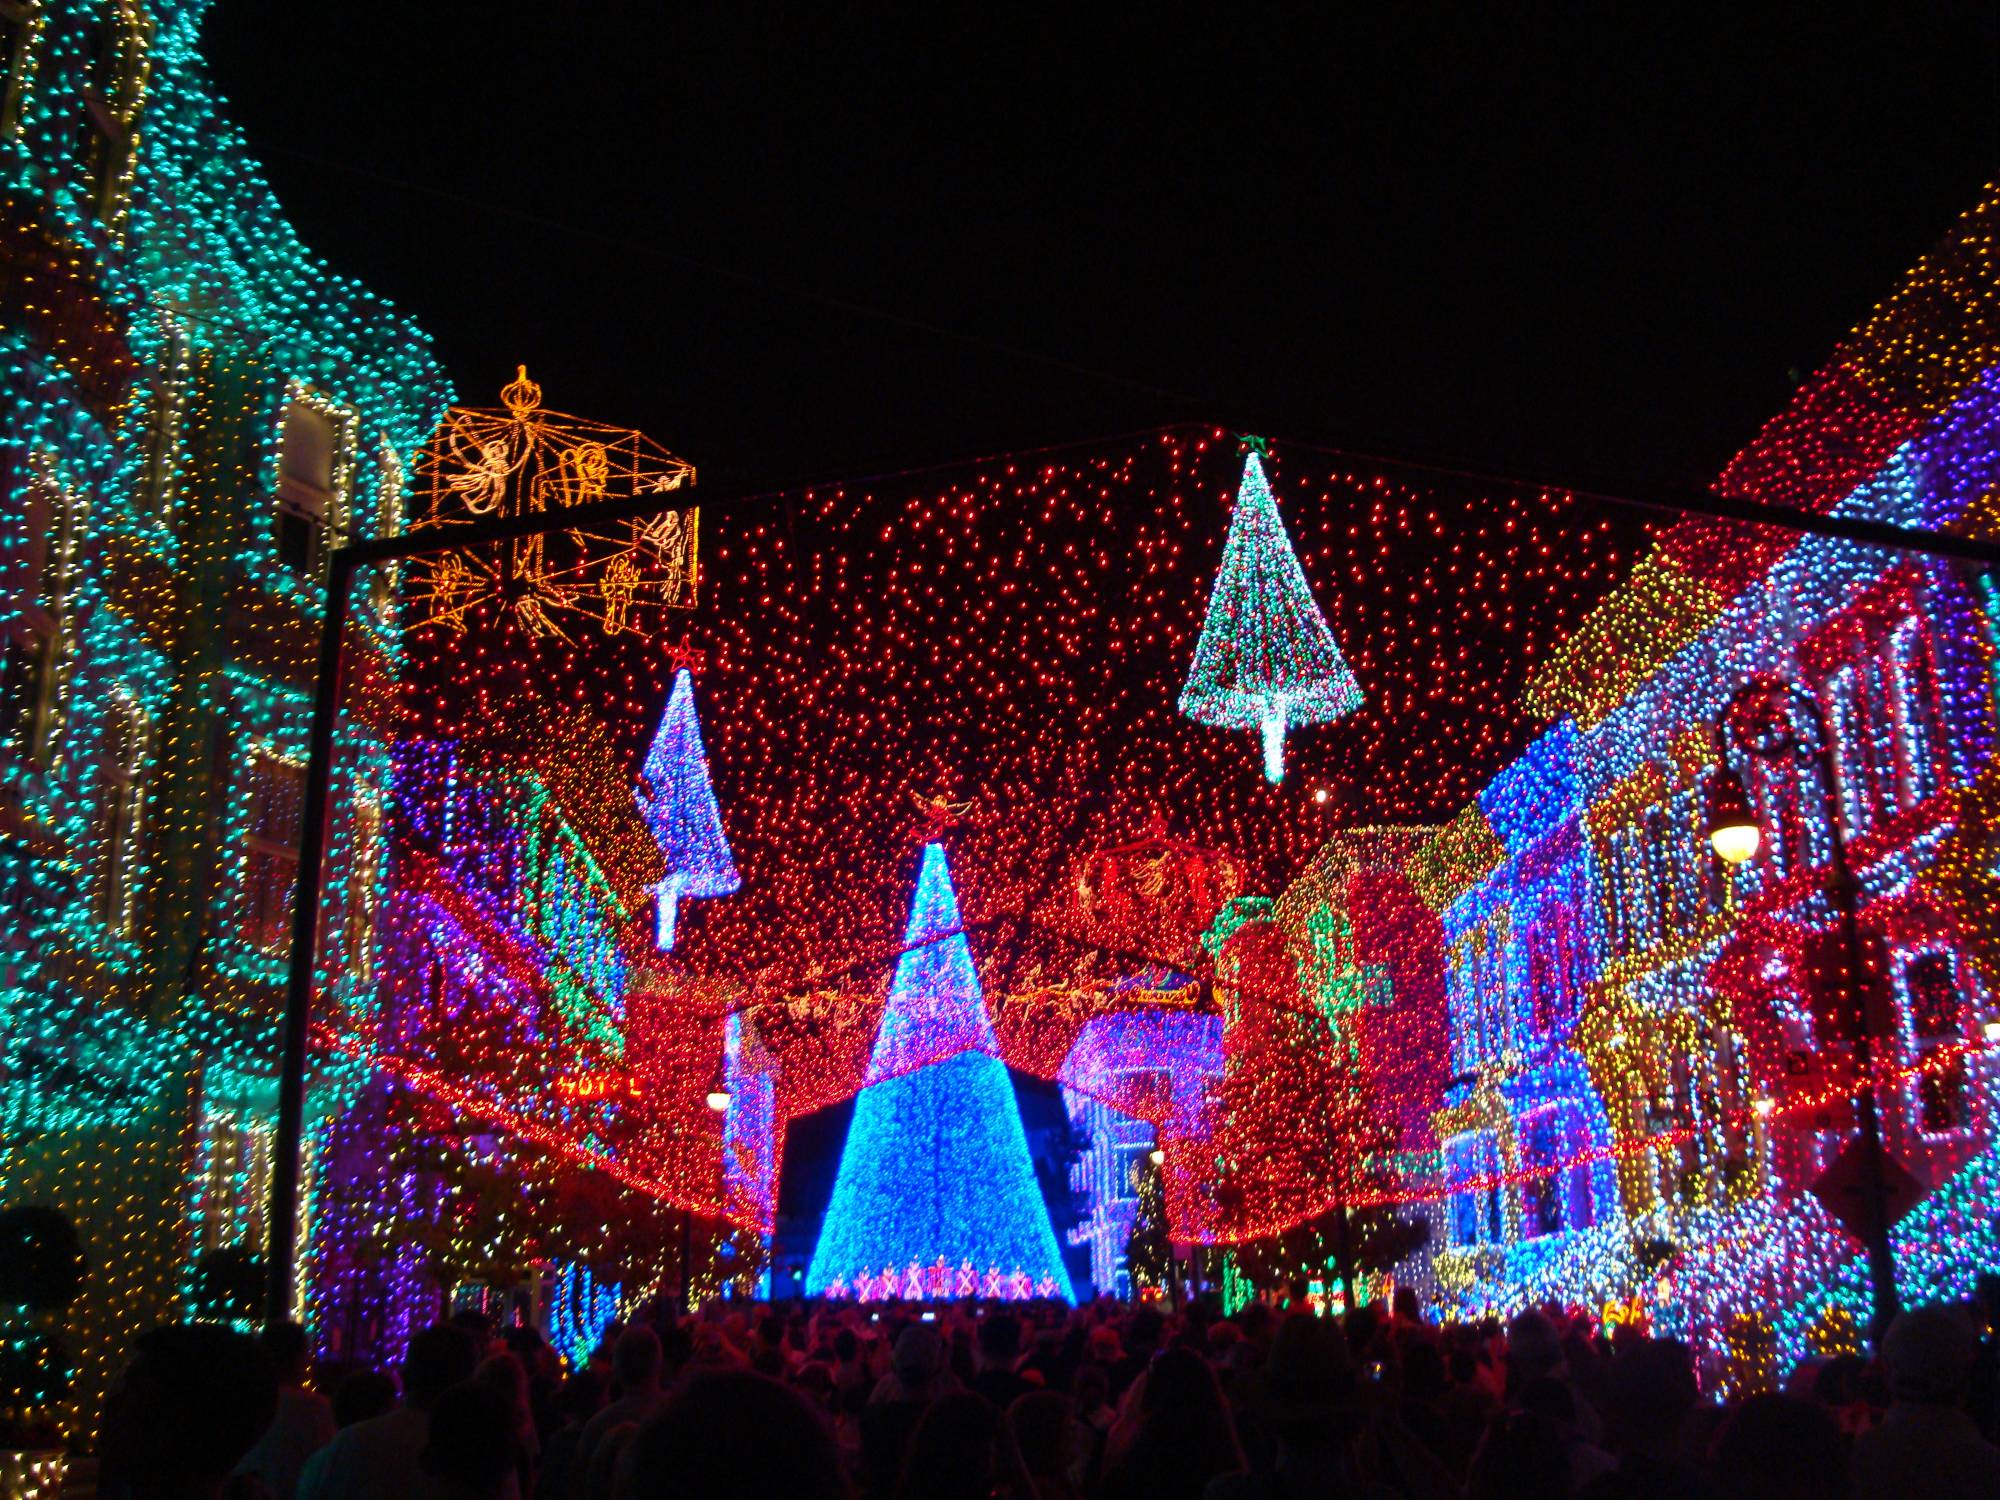 Discover the magic of Disney at the Holidays |PassPorter.com